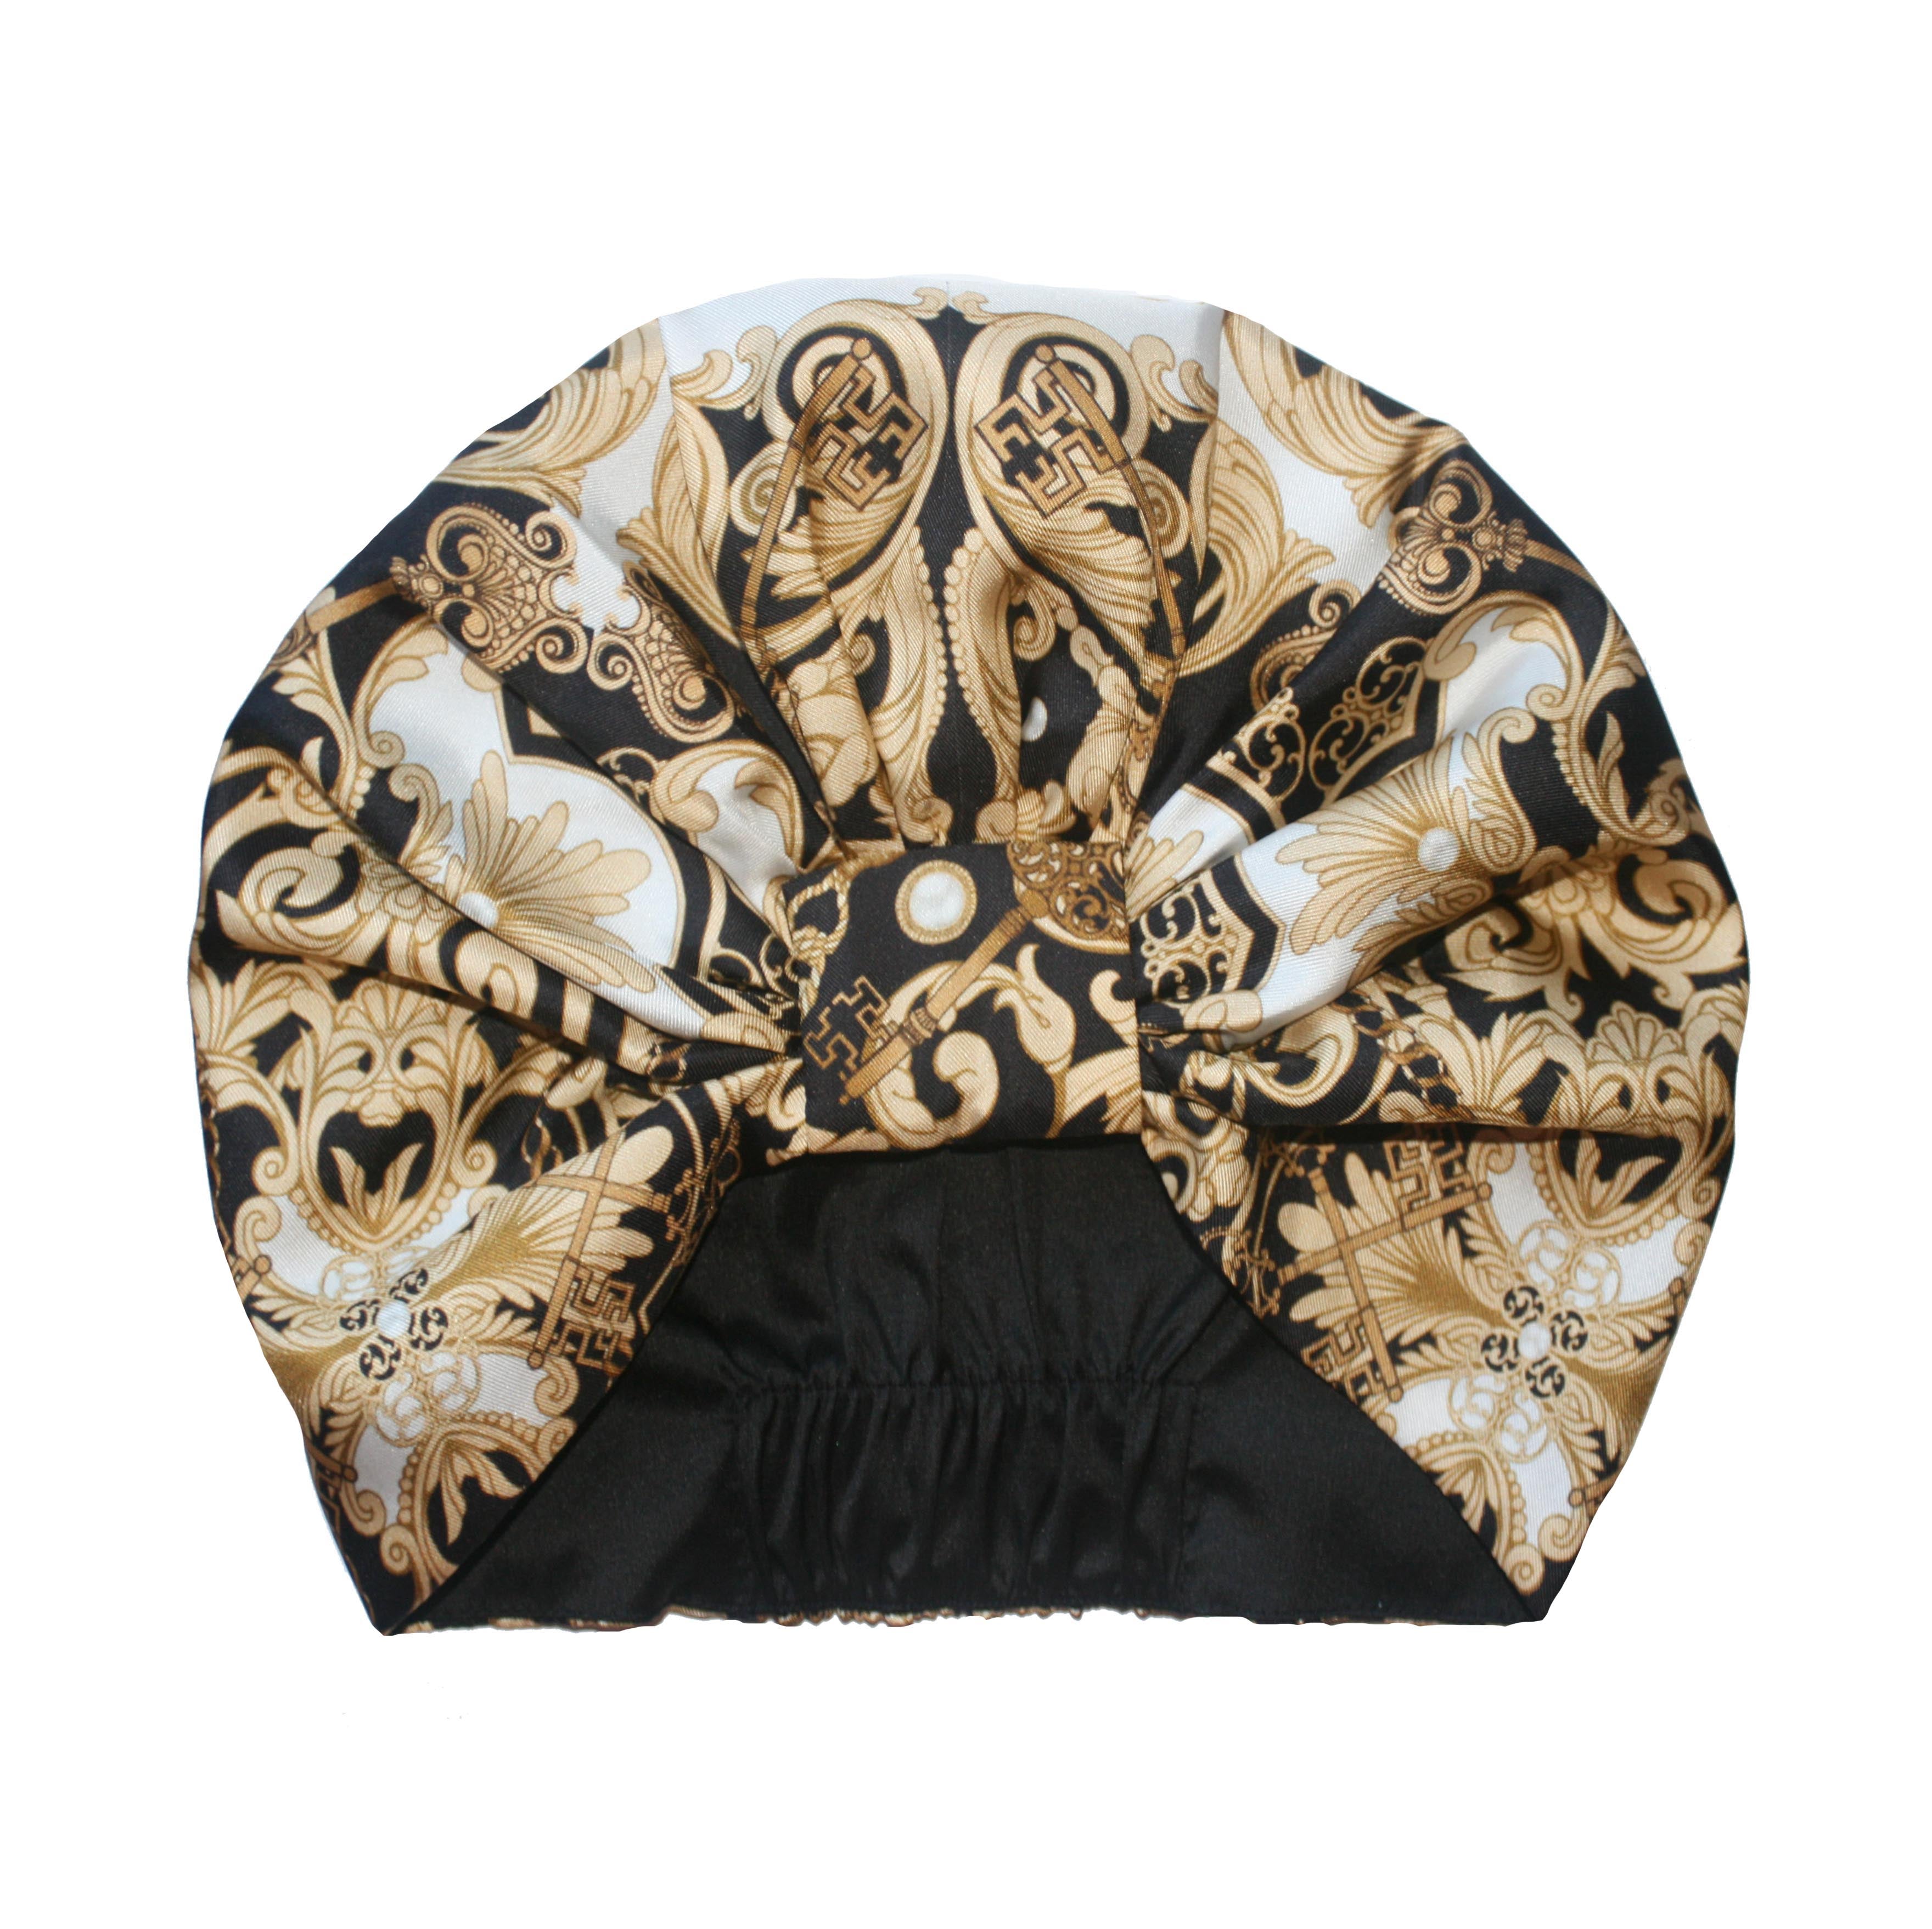 The Baroque Silk Turban